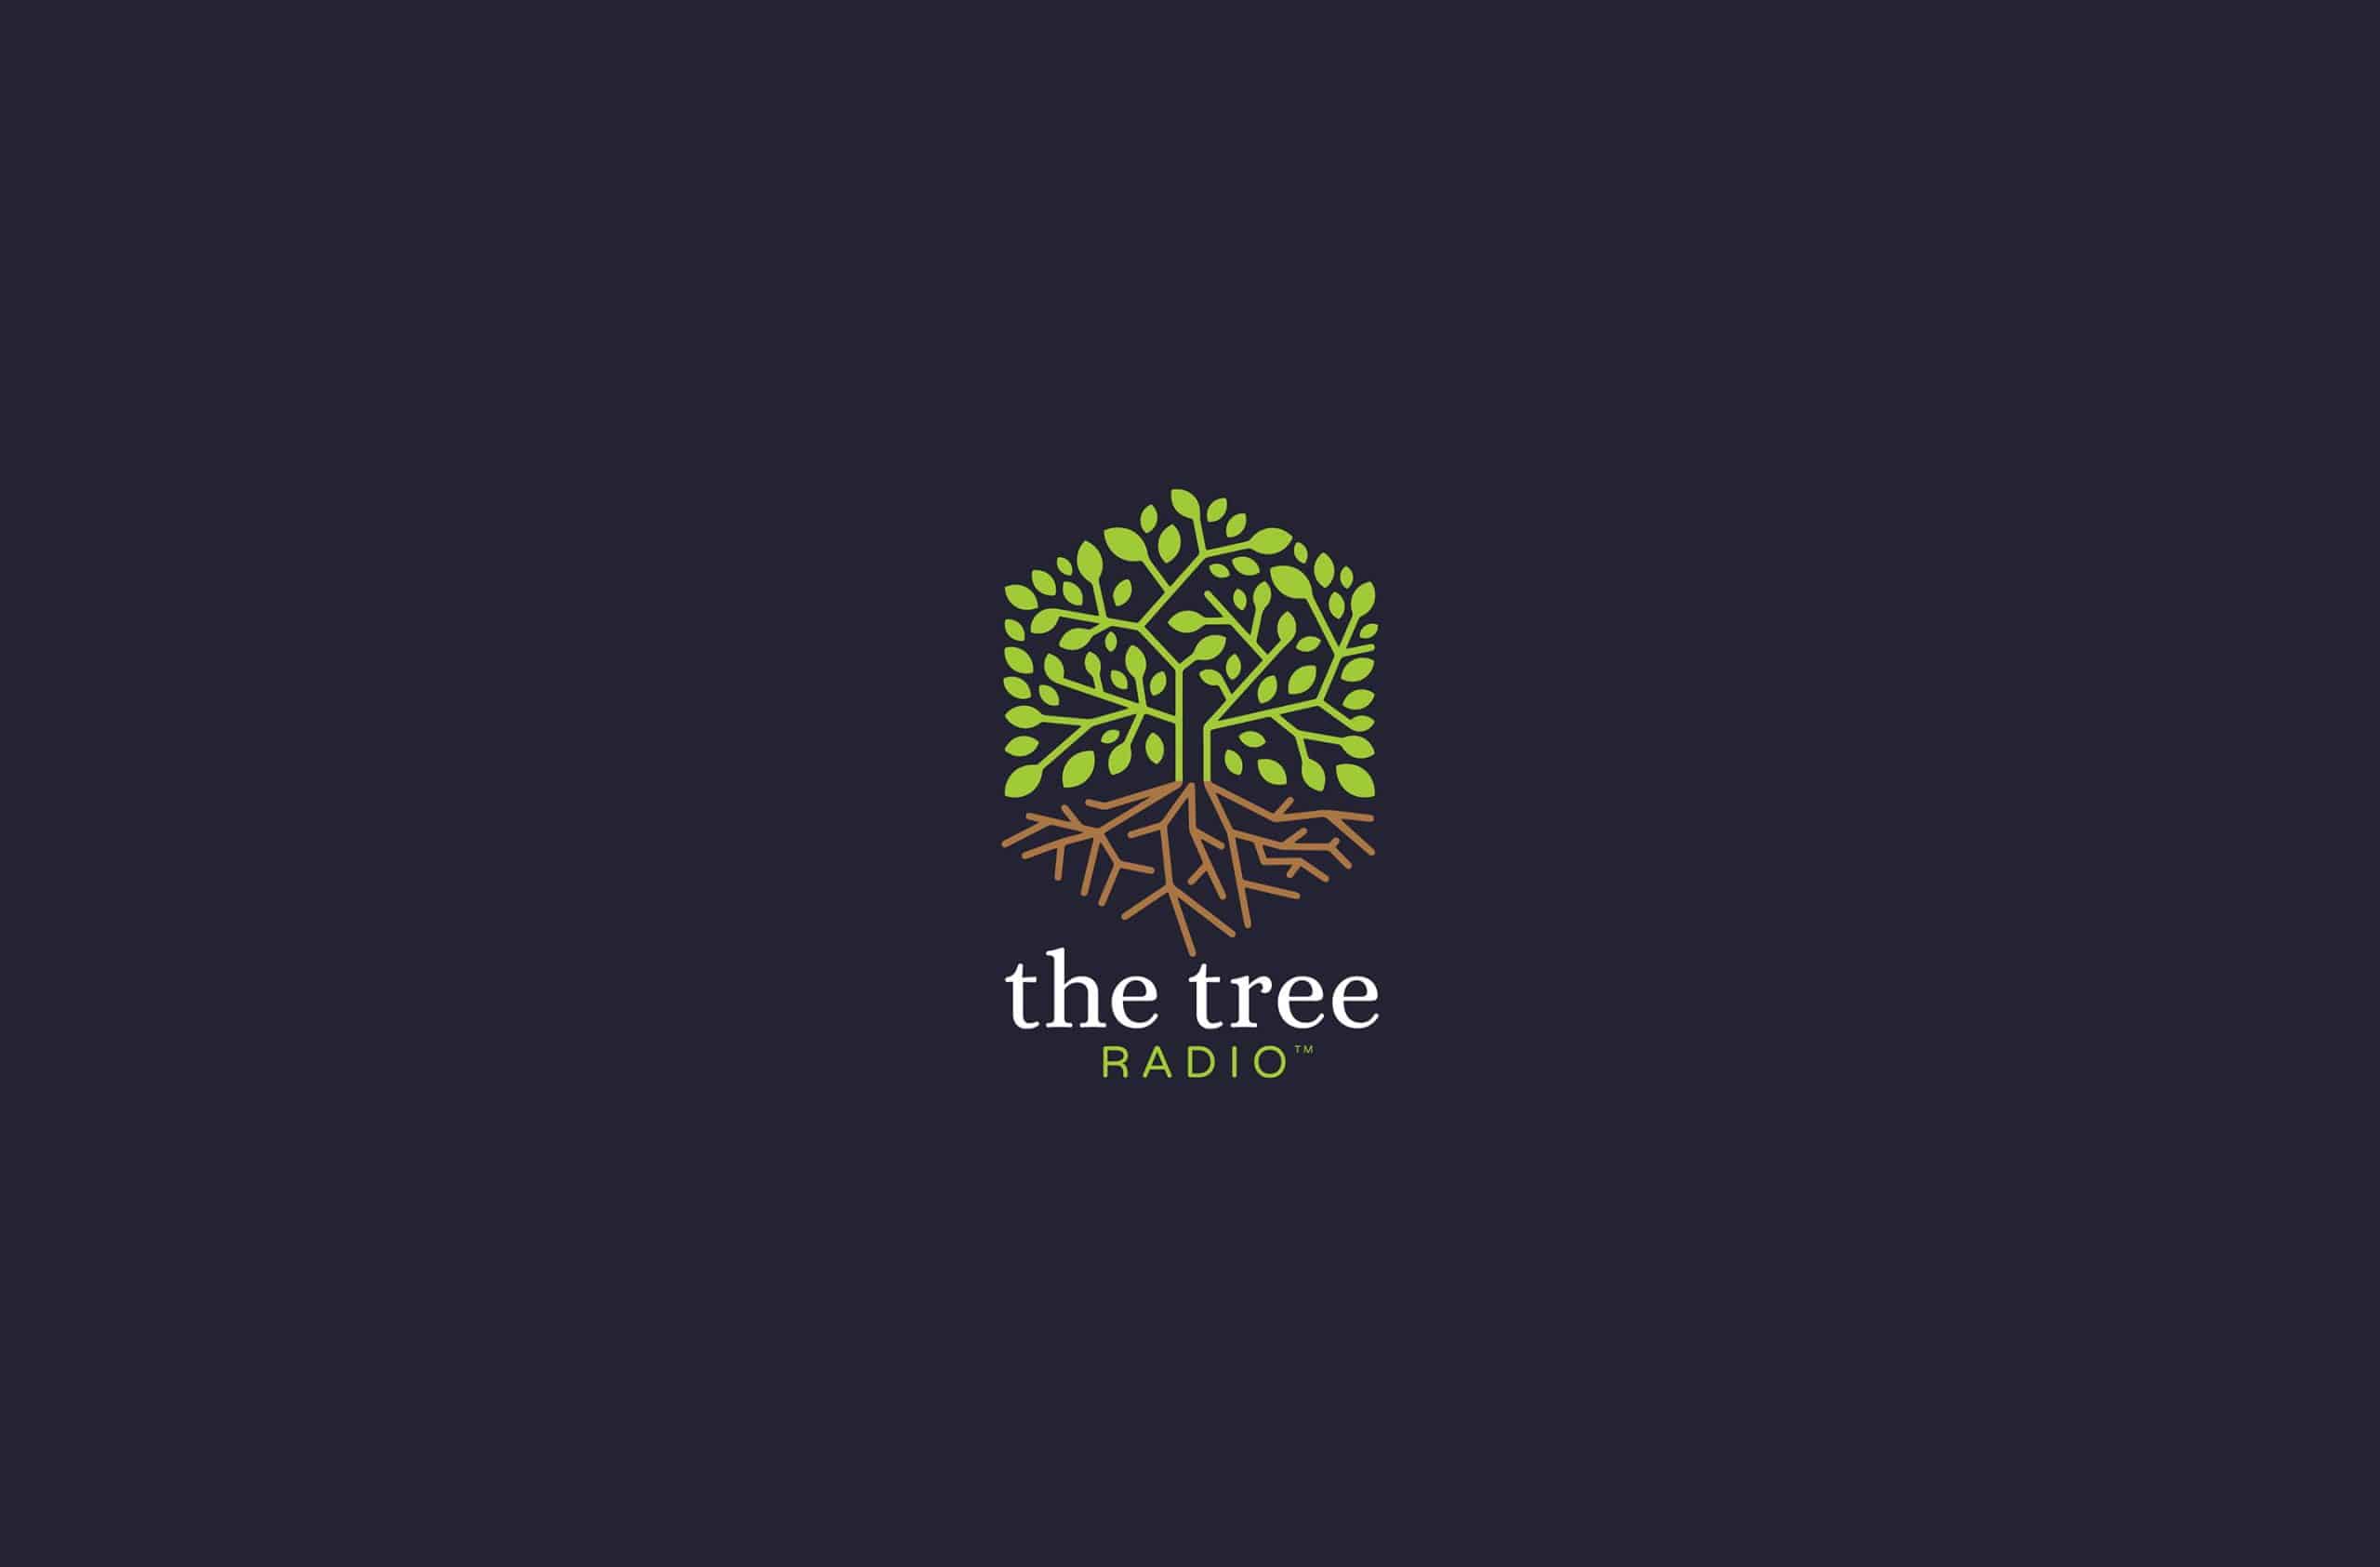 Southern Gospel Radio - The Tree Radio